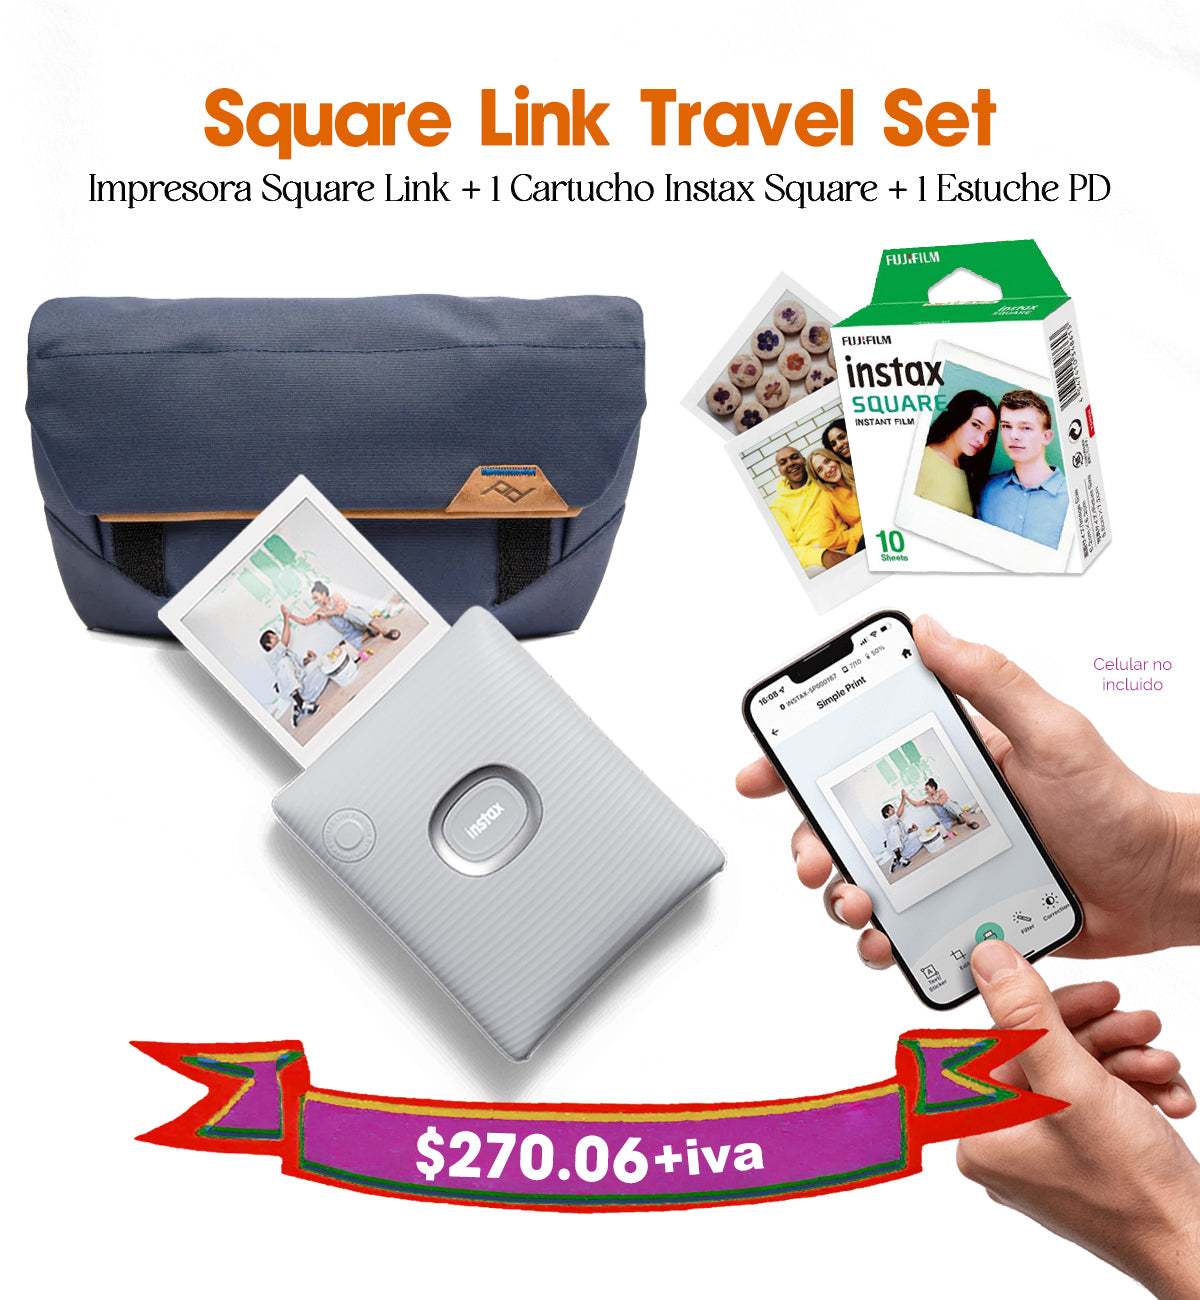 Square Link Travel Set